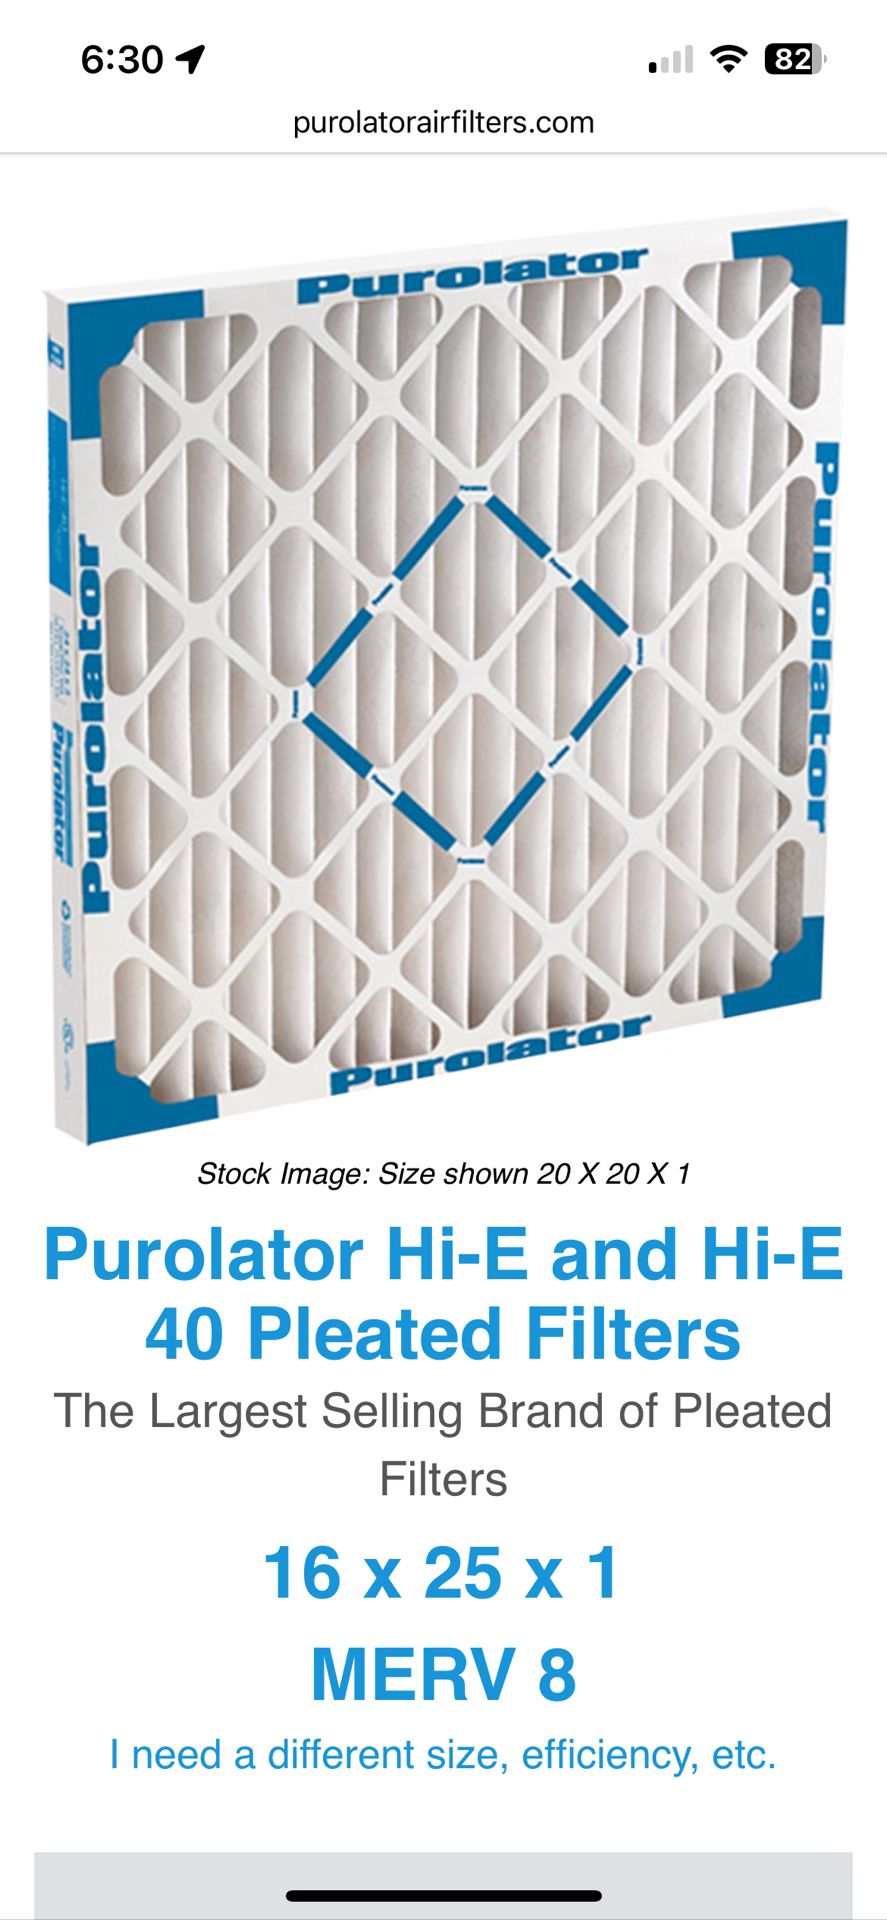 Purolator Hi-E 40 ”CASE” of Pleated Filters